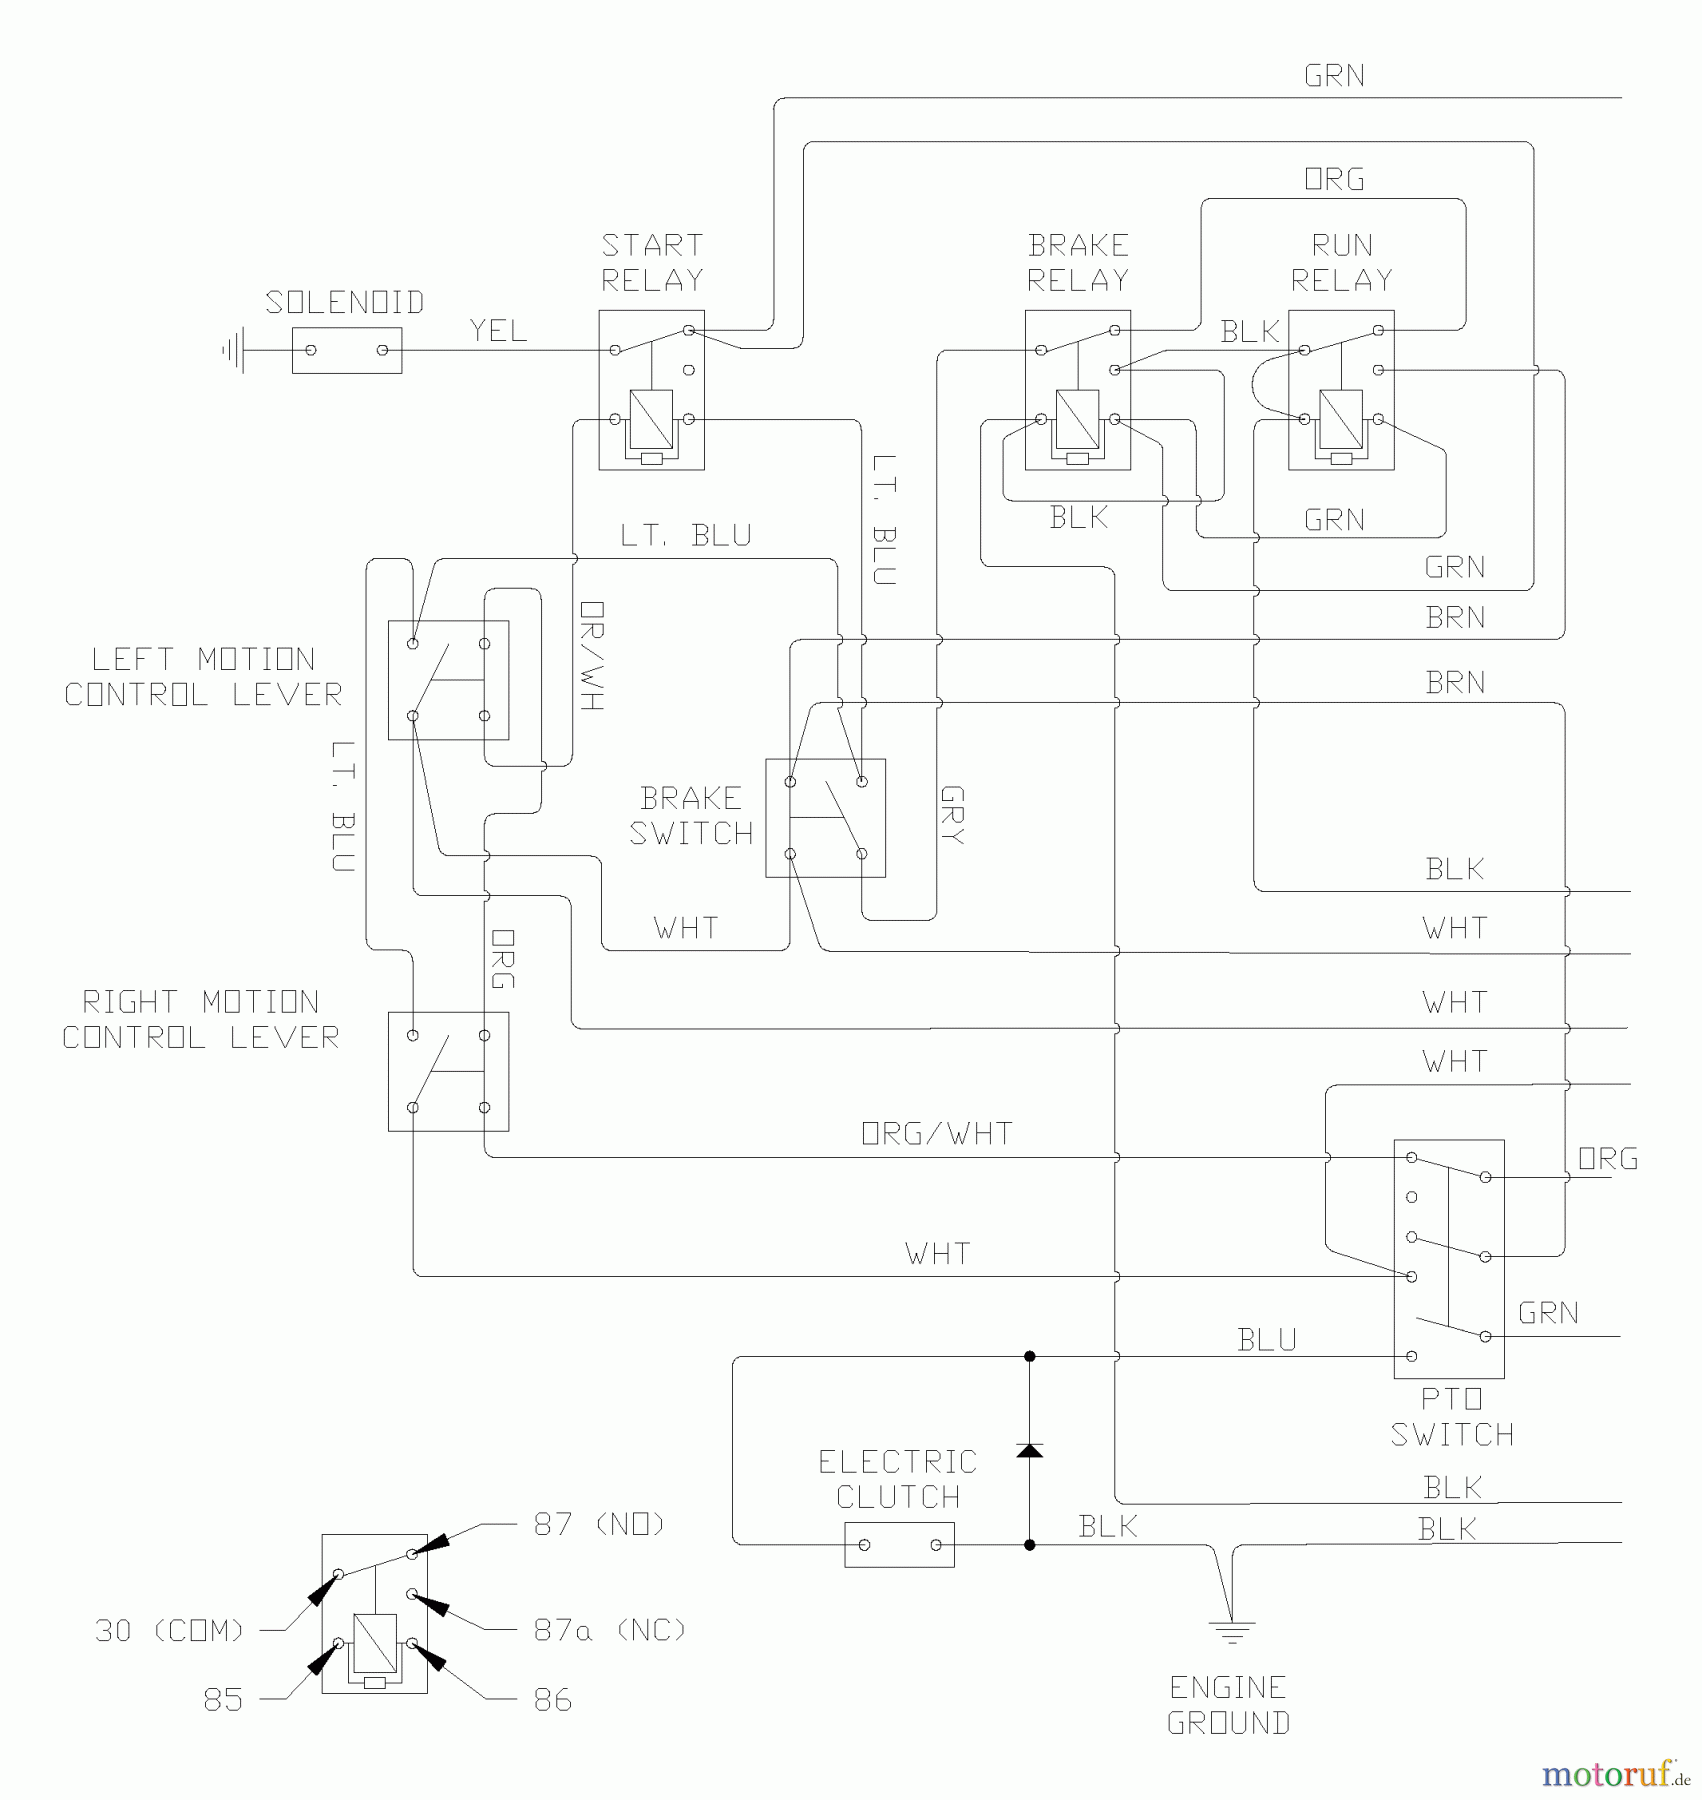  Husqvarna Nullwendekreismäher, Zero-Turn iZ 4217 (968999254) - Husqvarna Zero-Turn Mower (2005-03 & After) Wiring Diagram (Part 1)